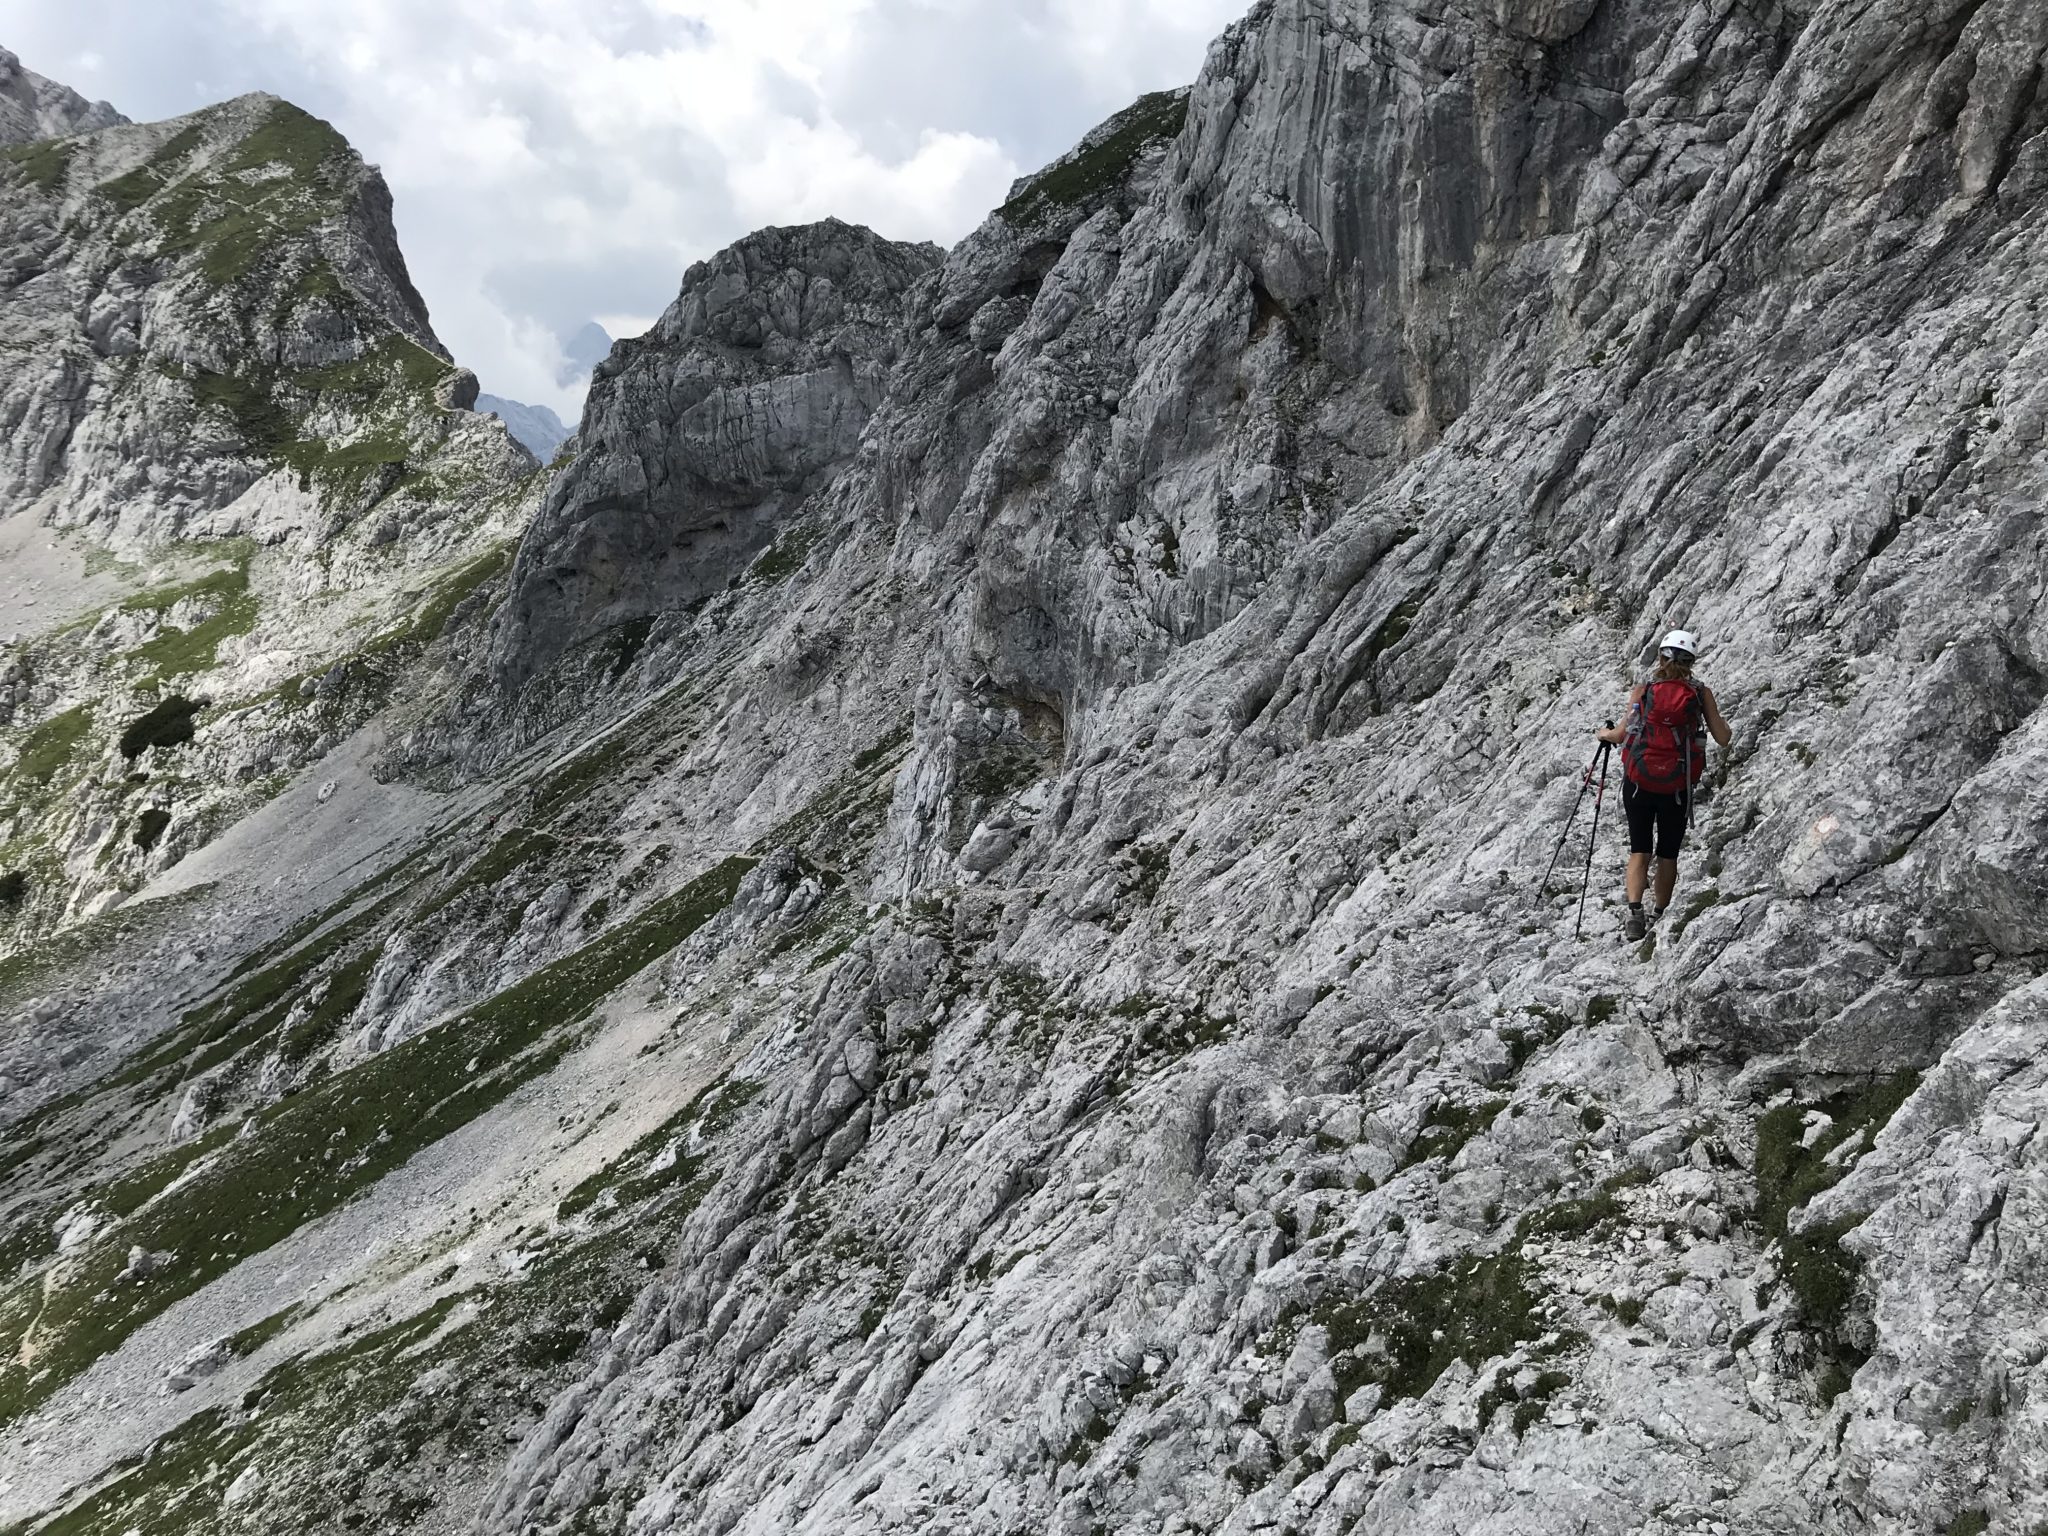 Crossing the steep slopes underneath Mt. Ojstrica and heading towards Mt. Planjava, Kamnik-Savinja Alps, Slovenia